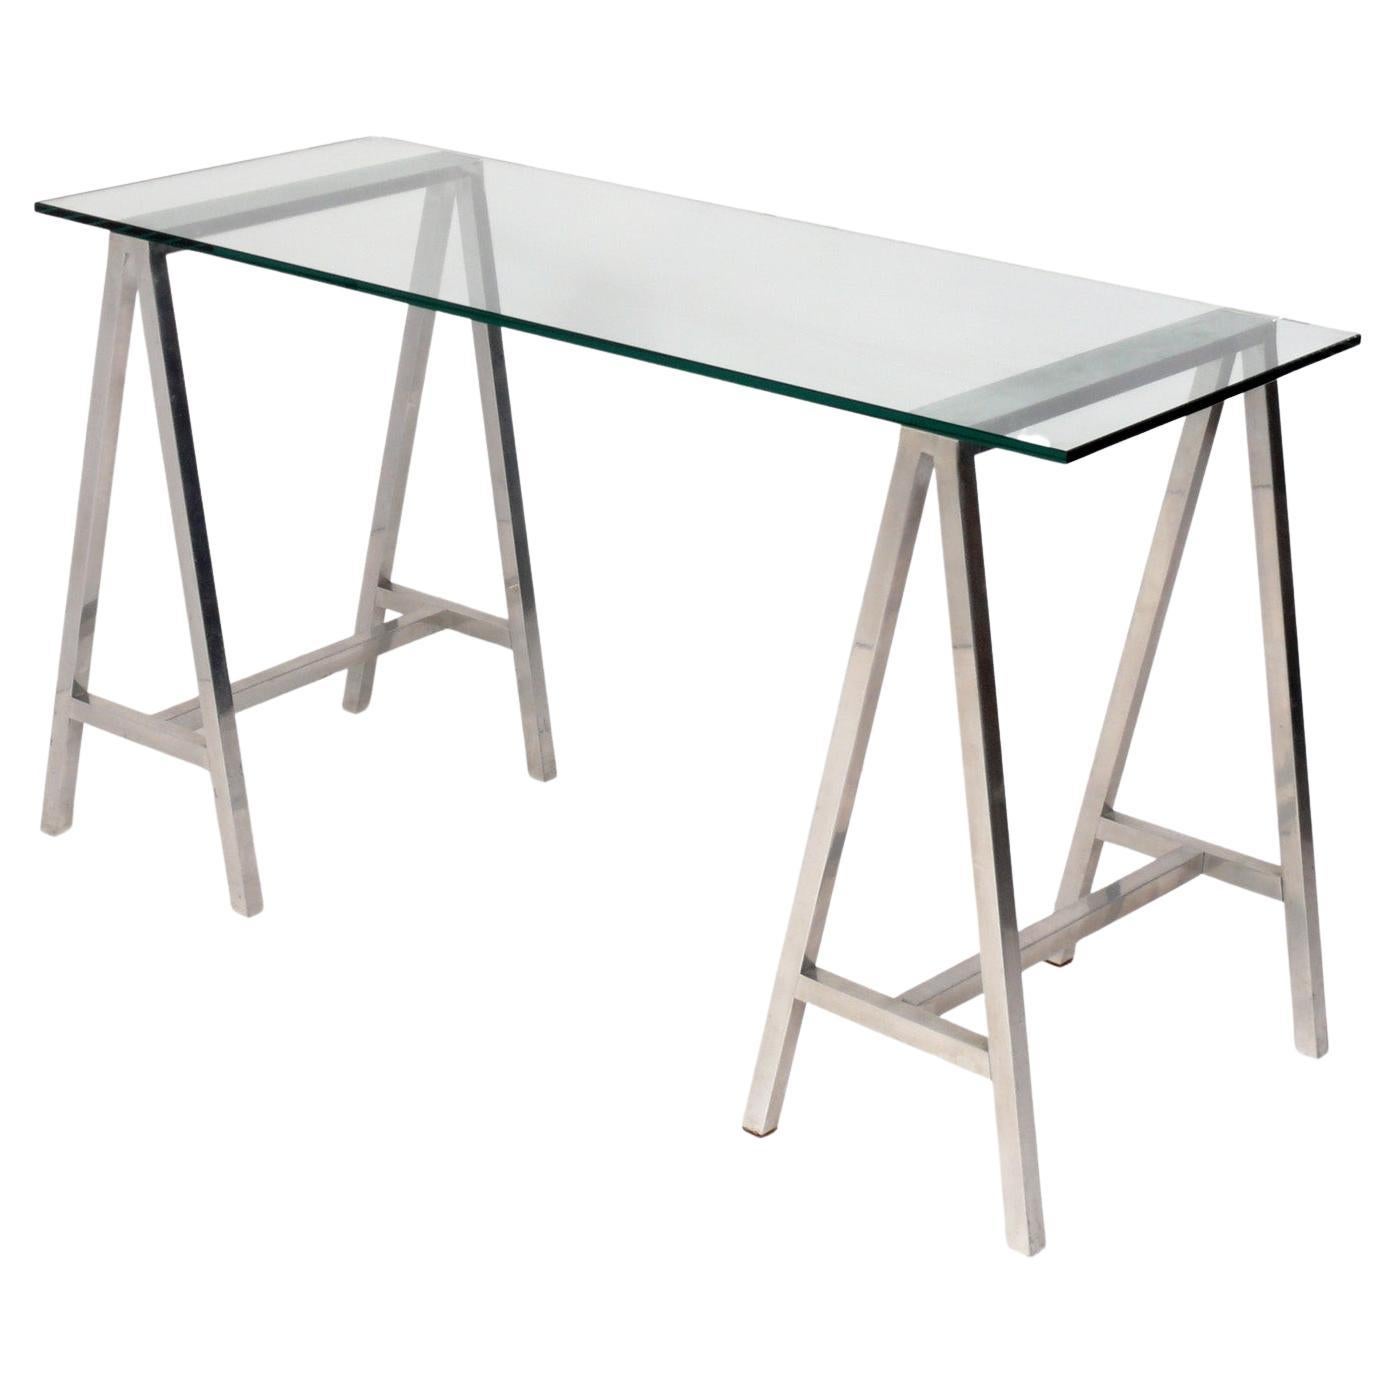 Aluminum Sawhorse Console Table or Desk